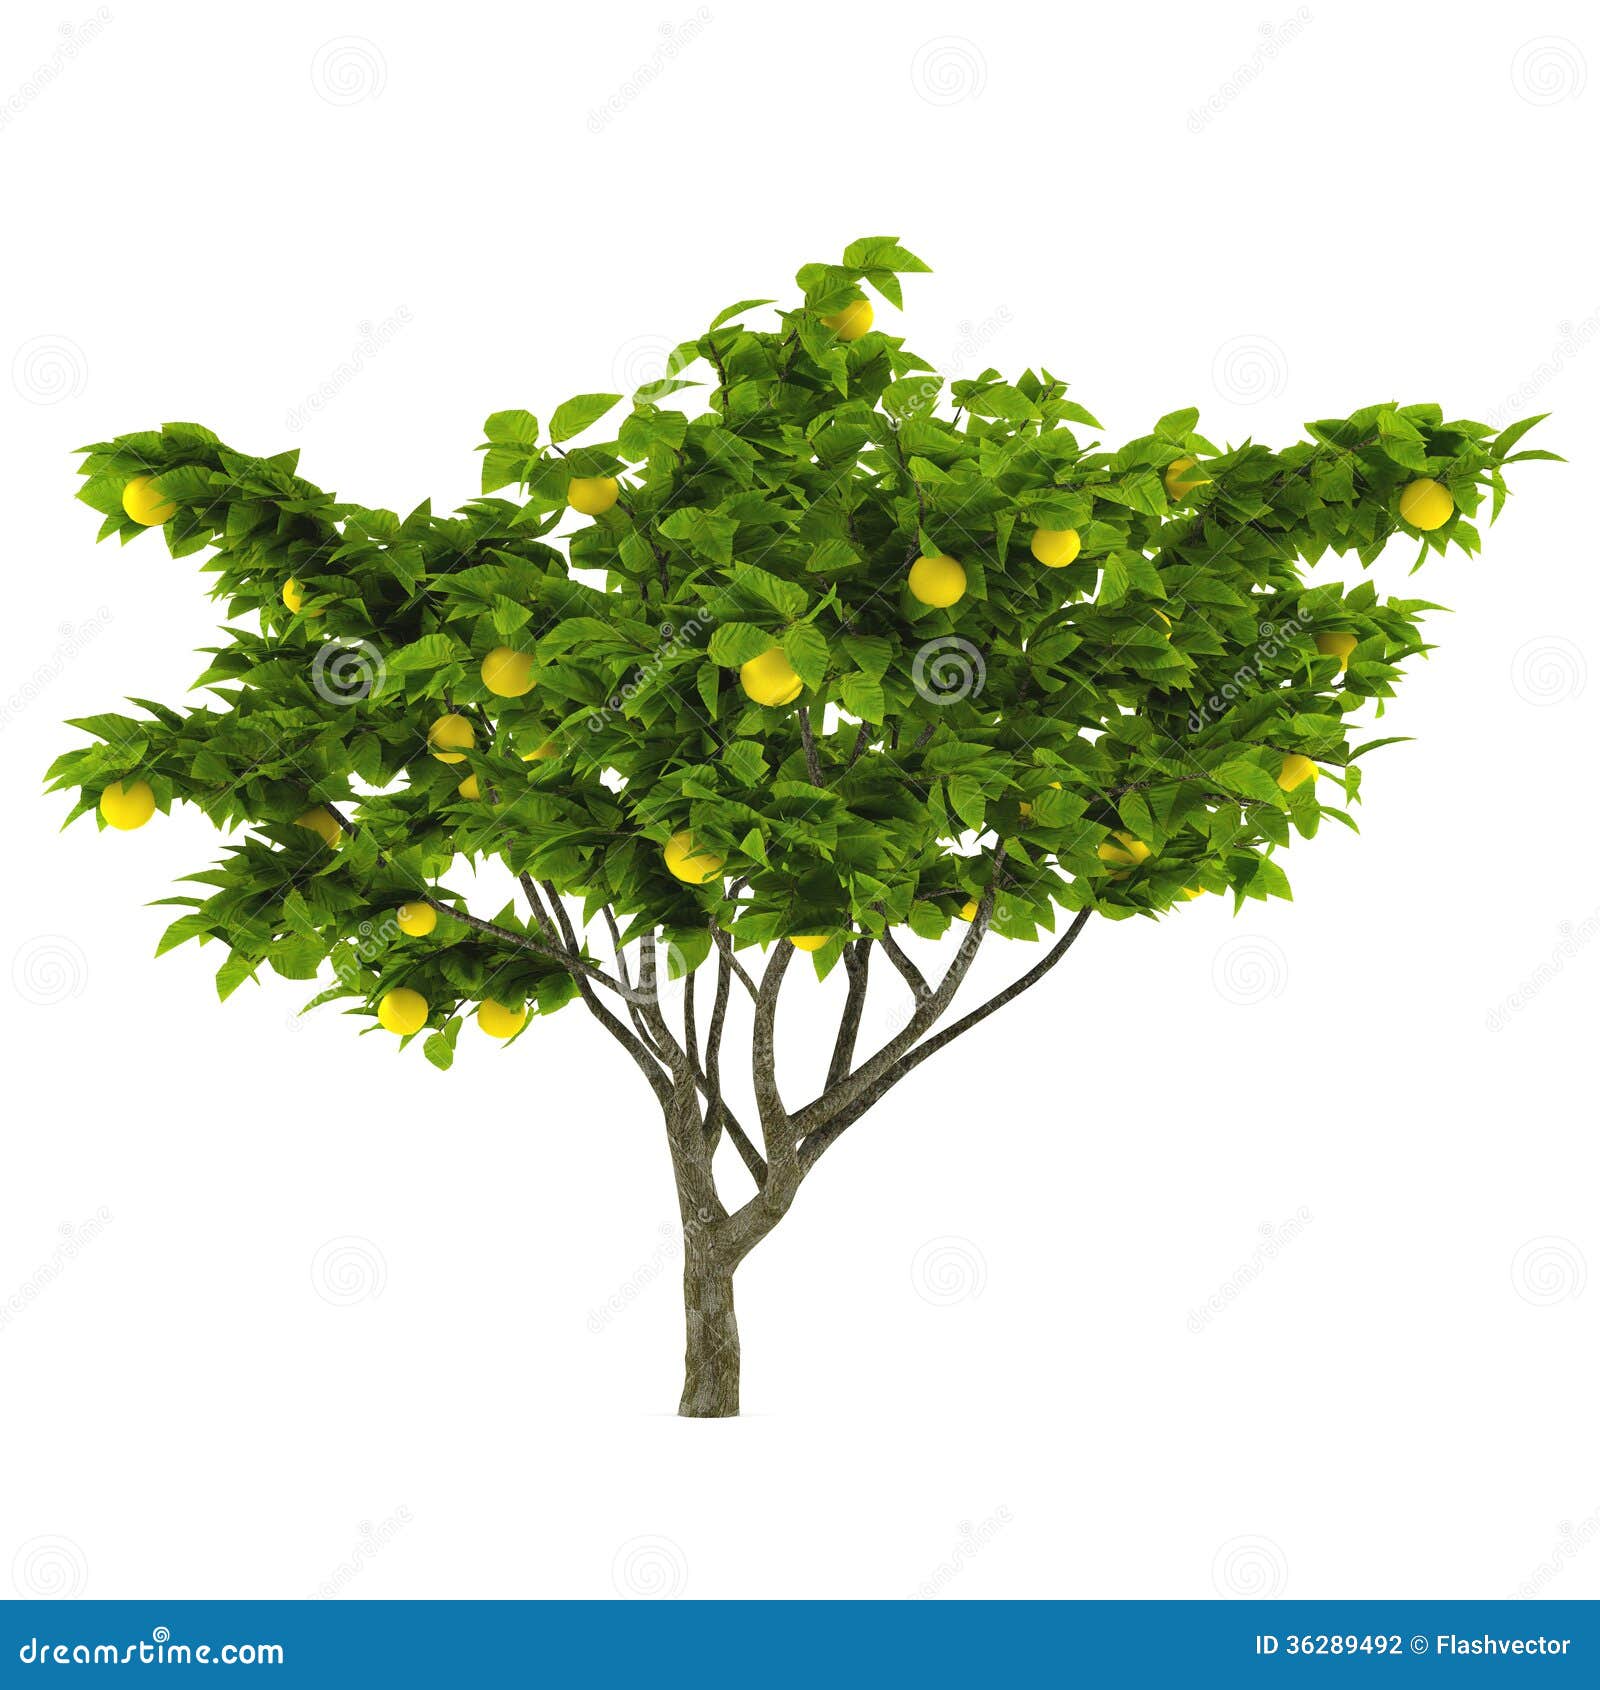 clipart lemon tree - photo #7